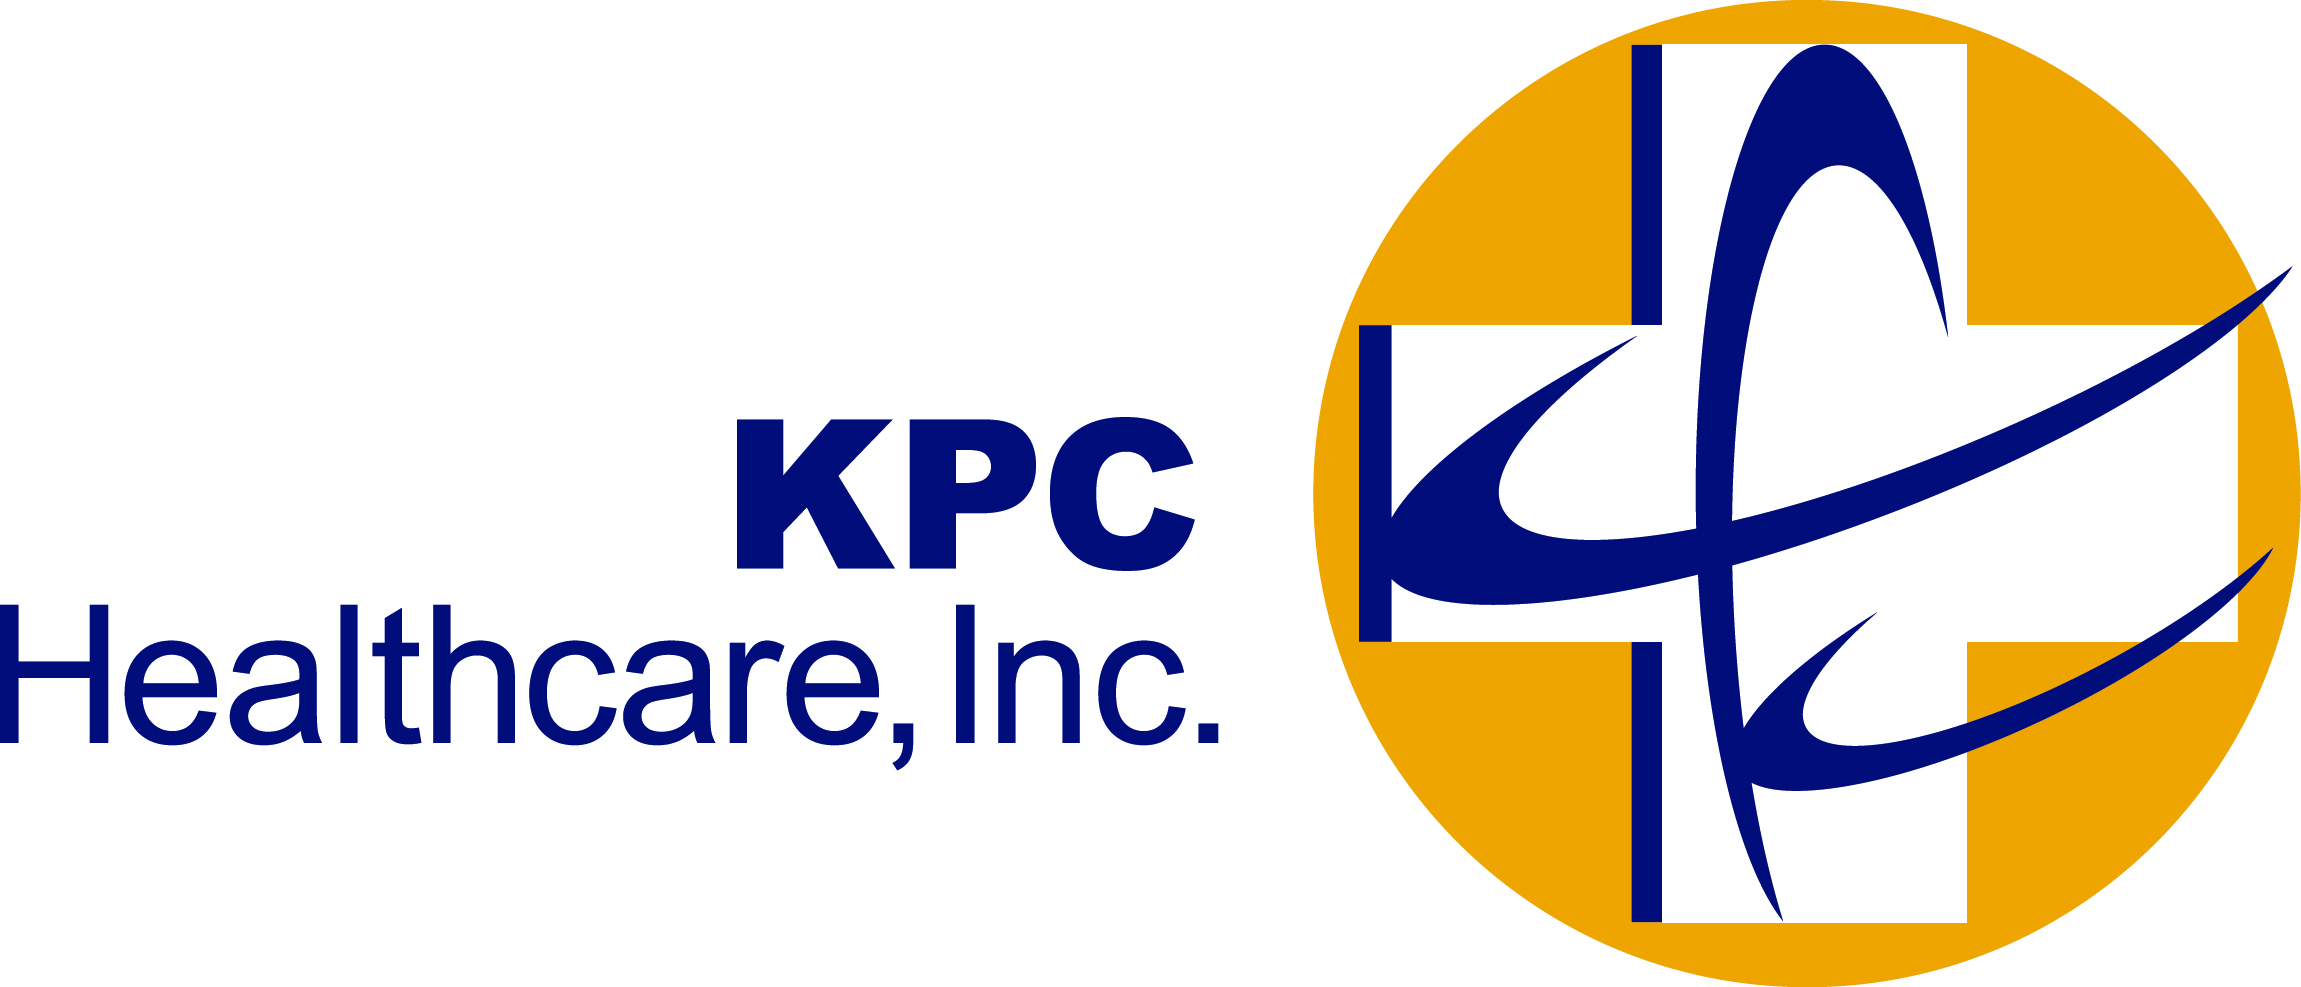 KPC Healthcare